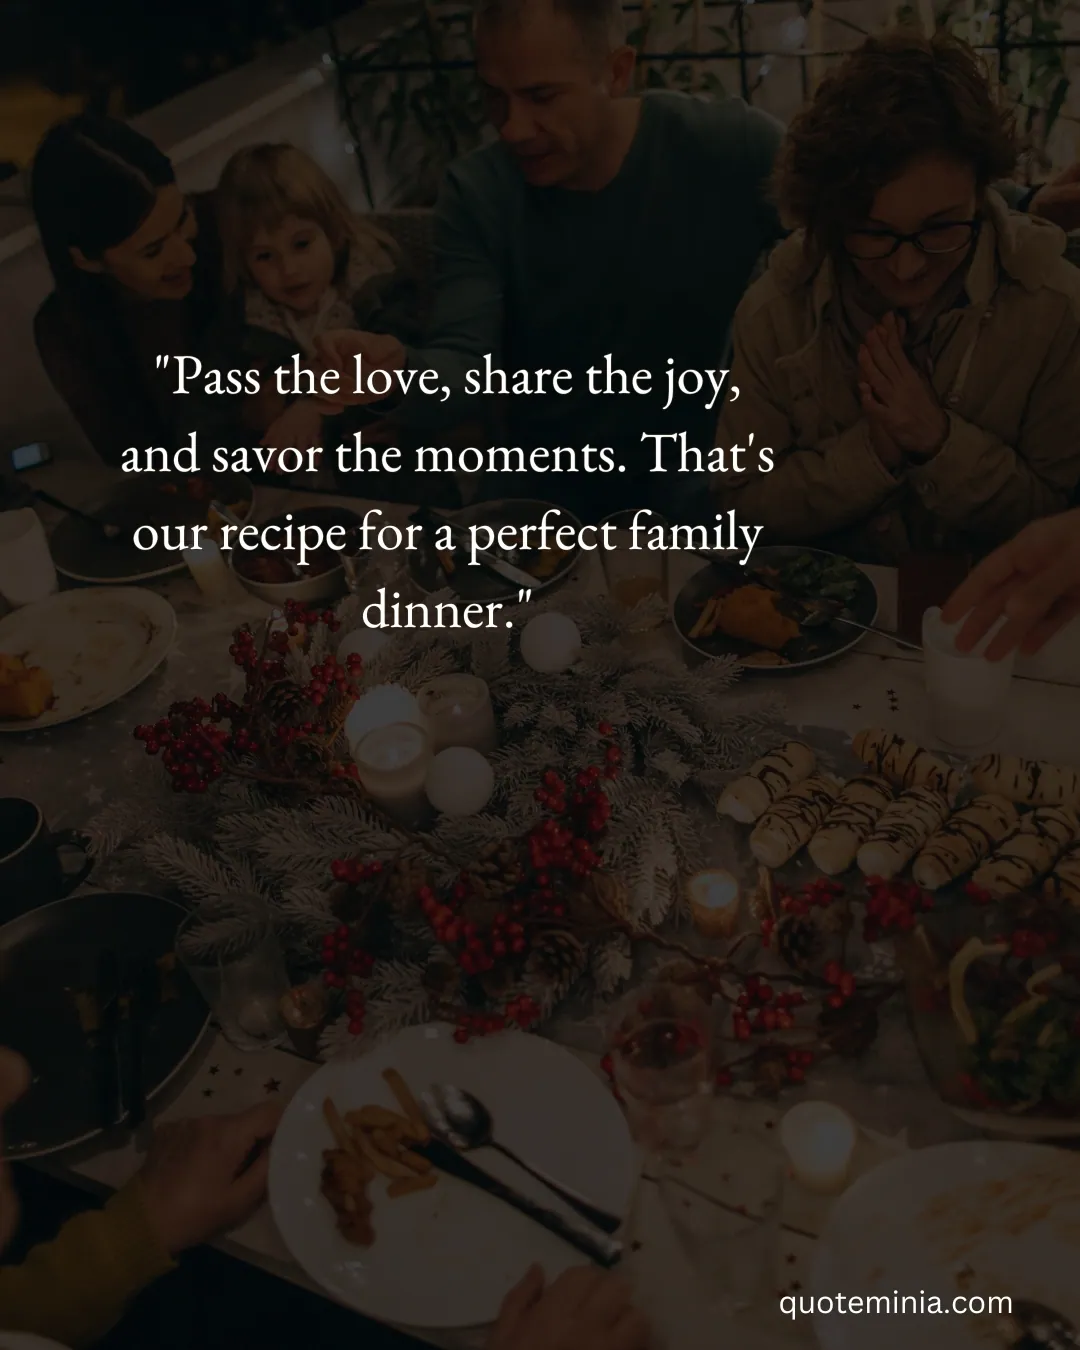 Family Dinner Quotes for Instagram